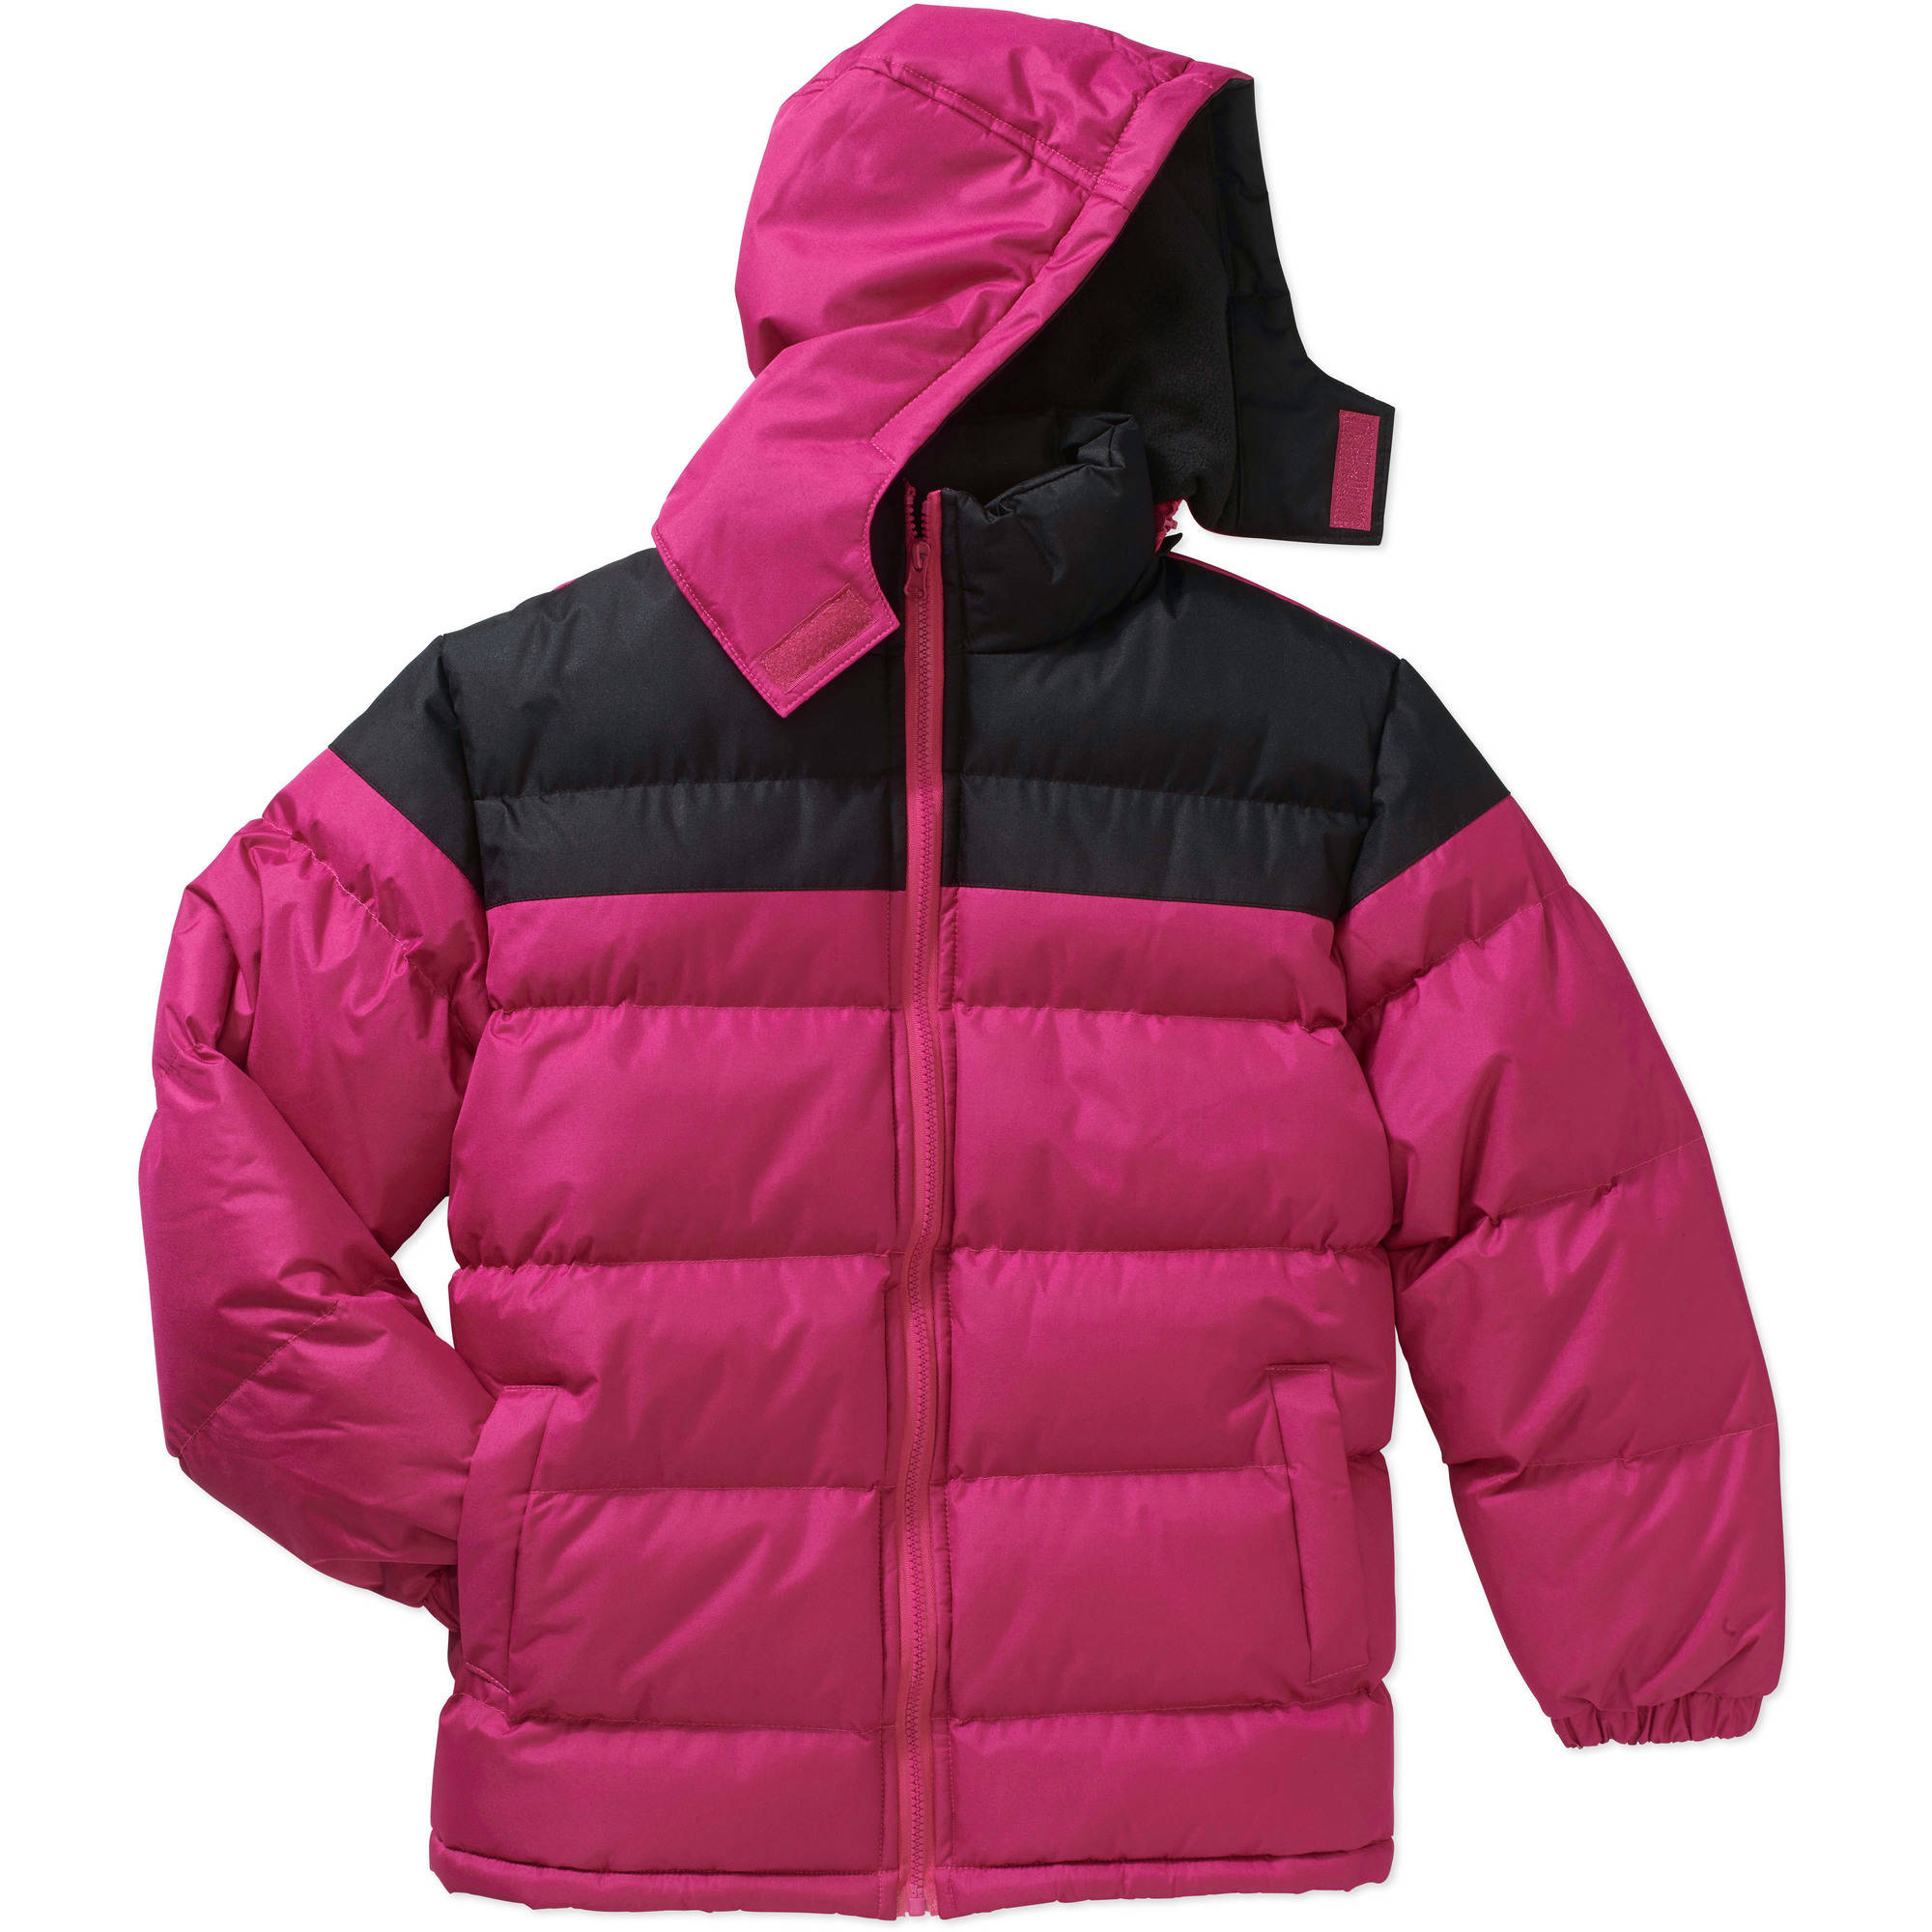 Girls' Puffer Coat with Polar Fleece Lining - image 1 of 2